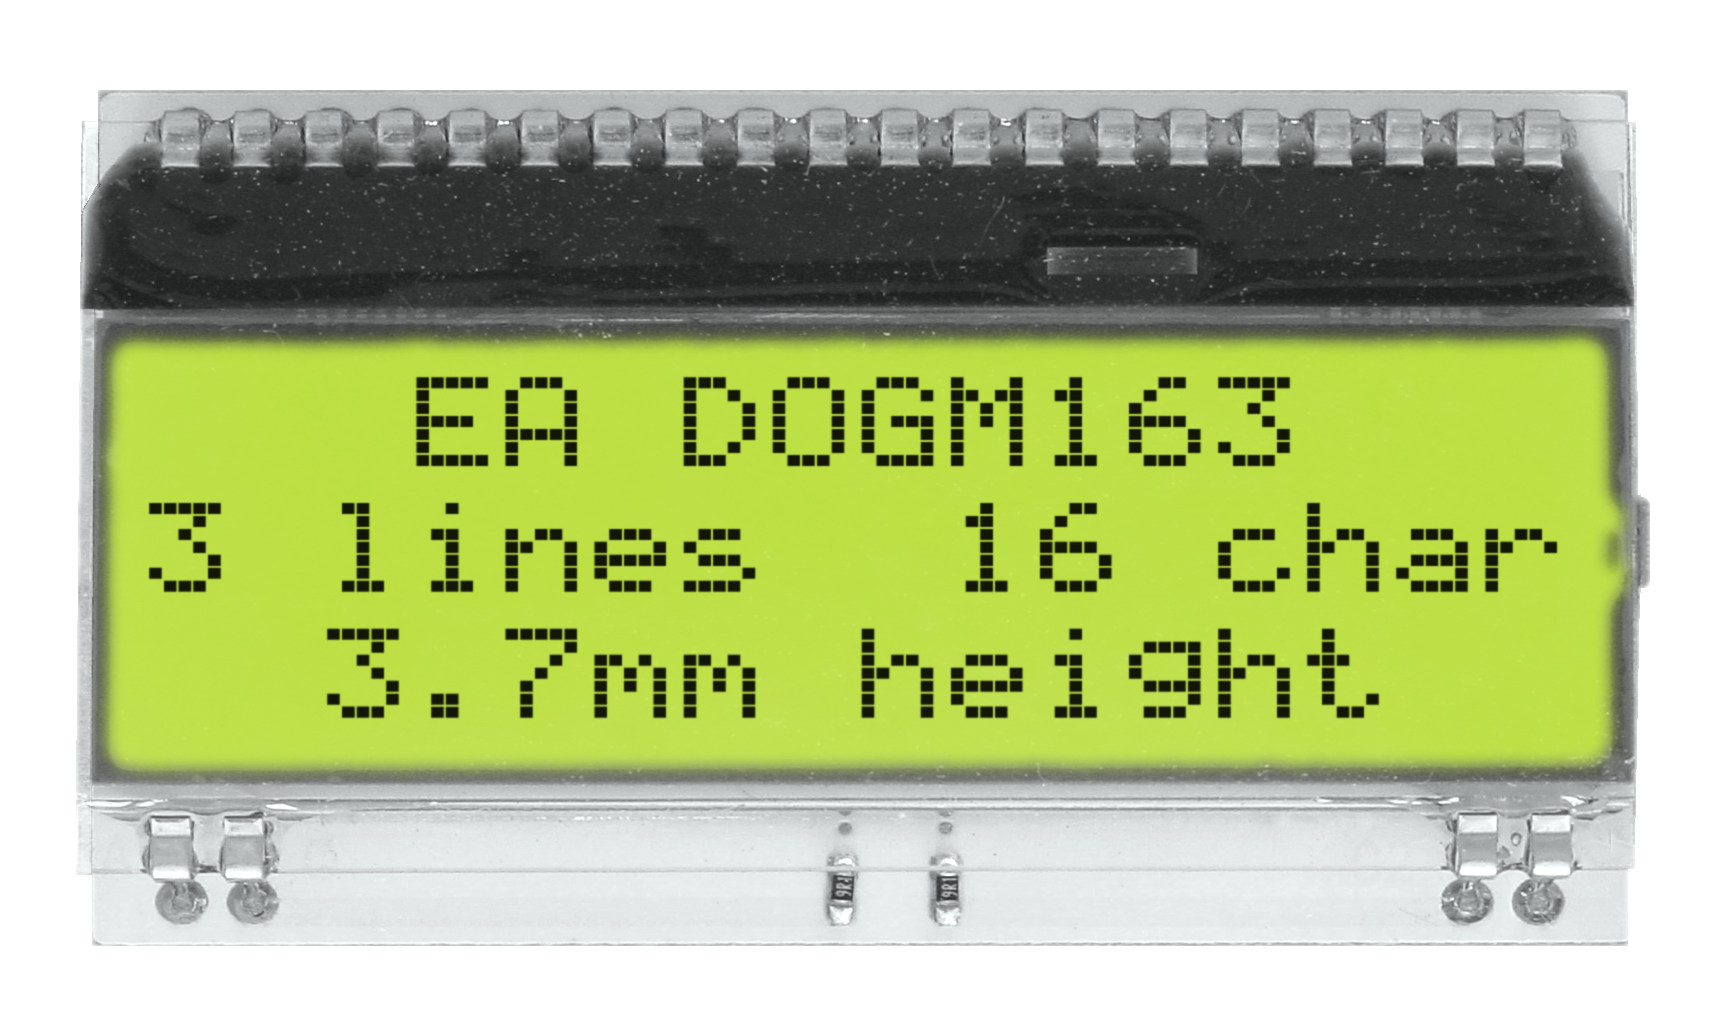 3x16 Character Display EA DOGM163E-A